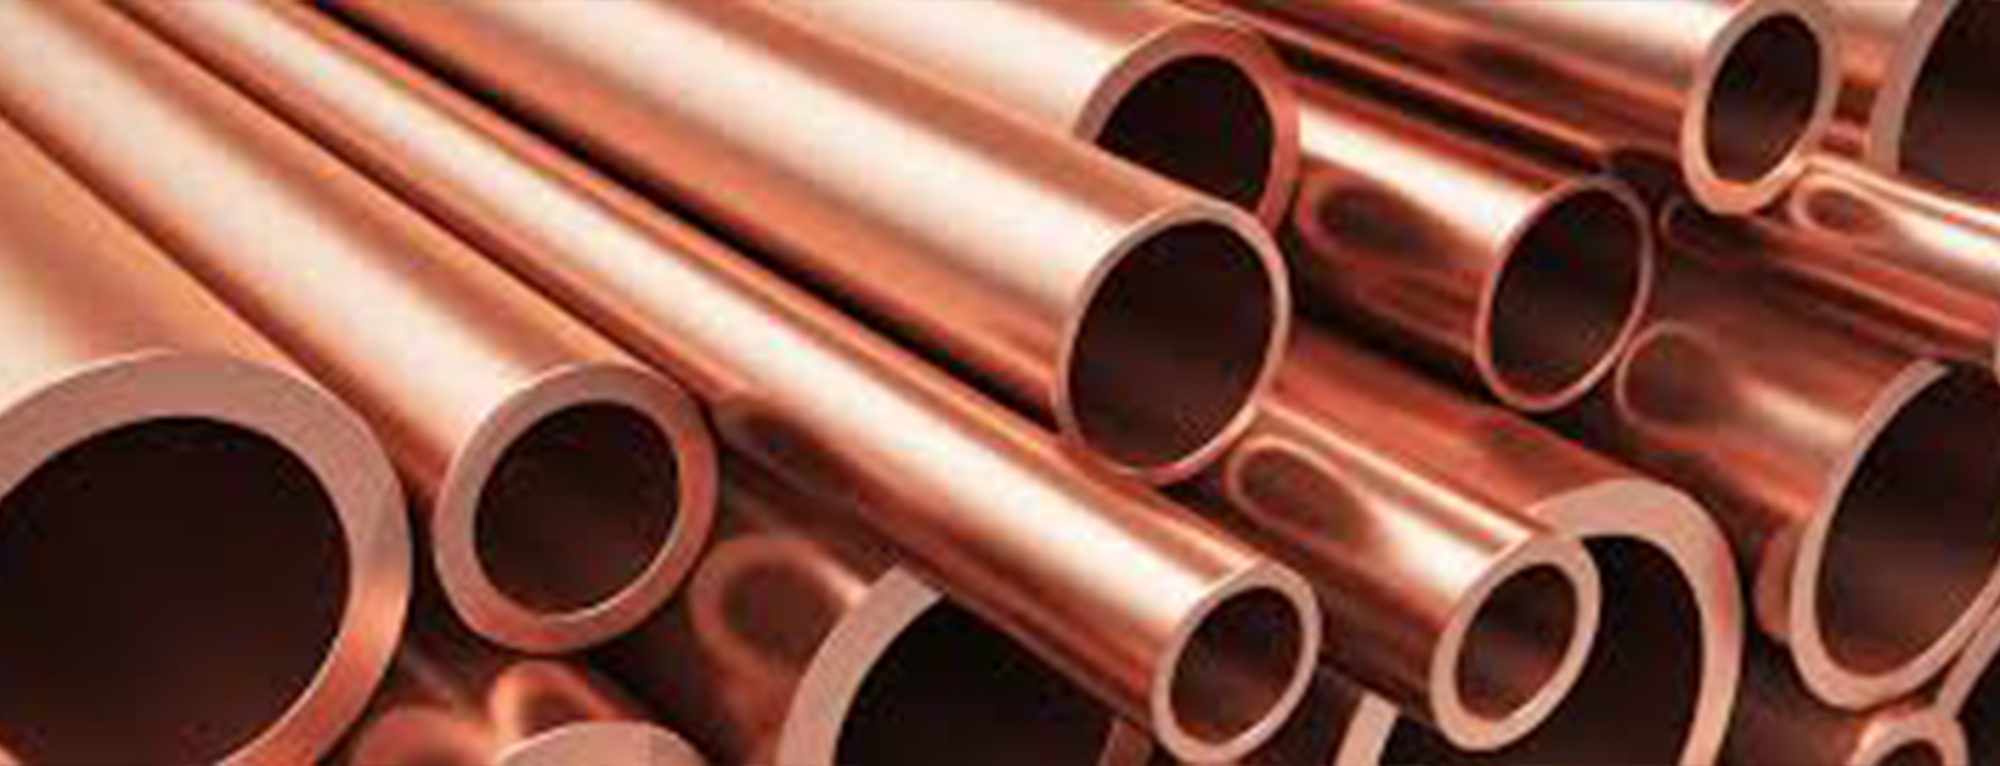 Copper Pipes & Tube